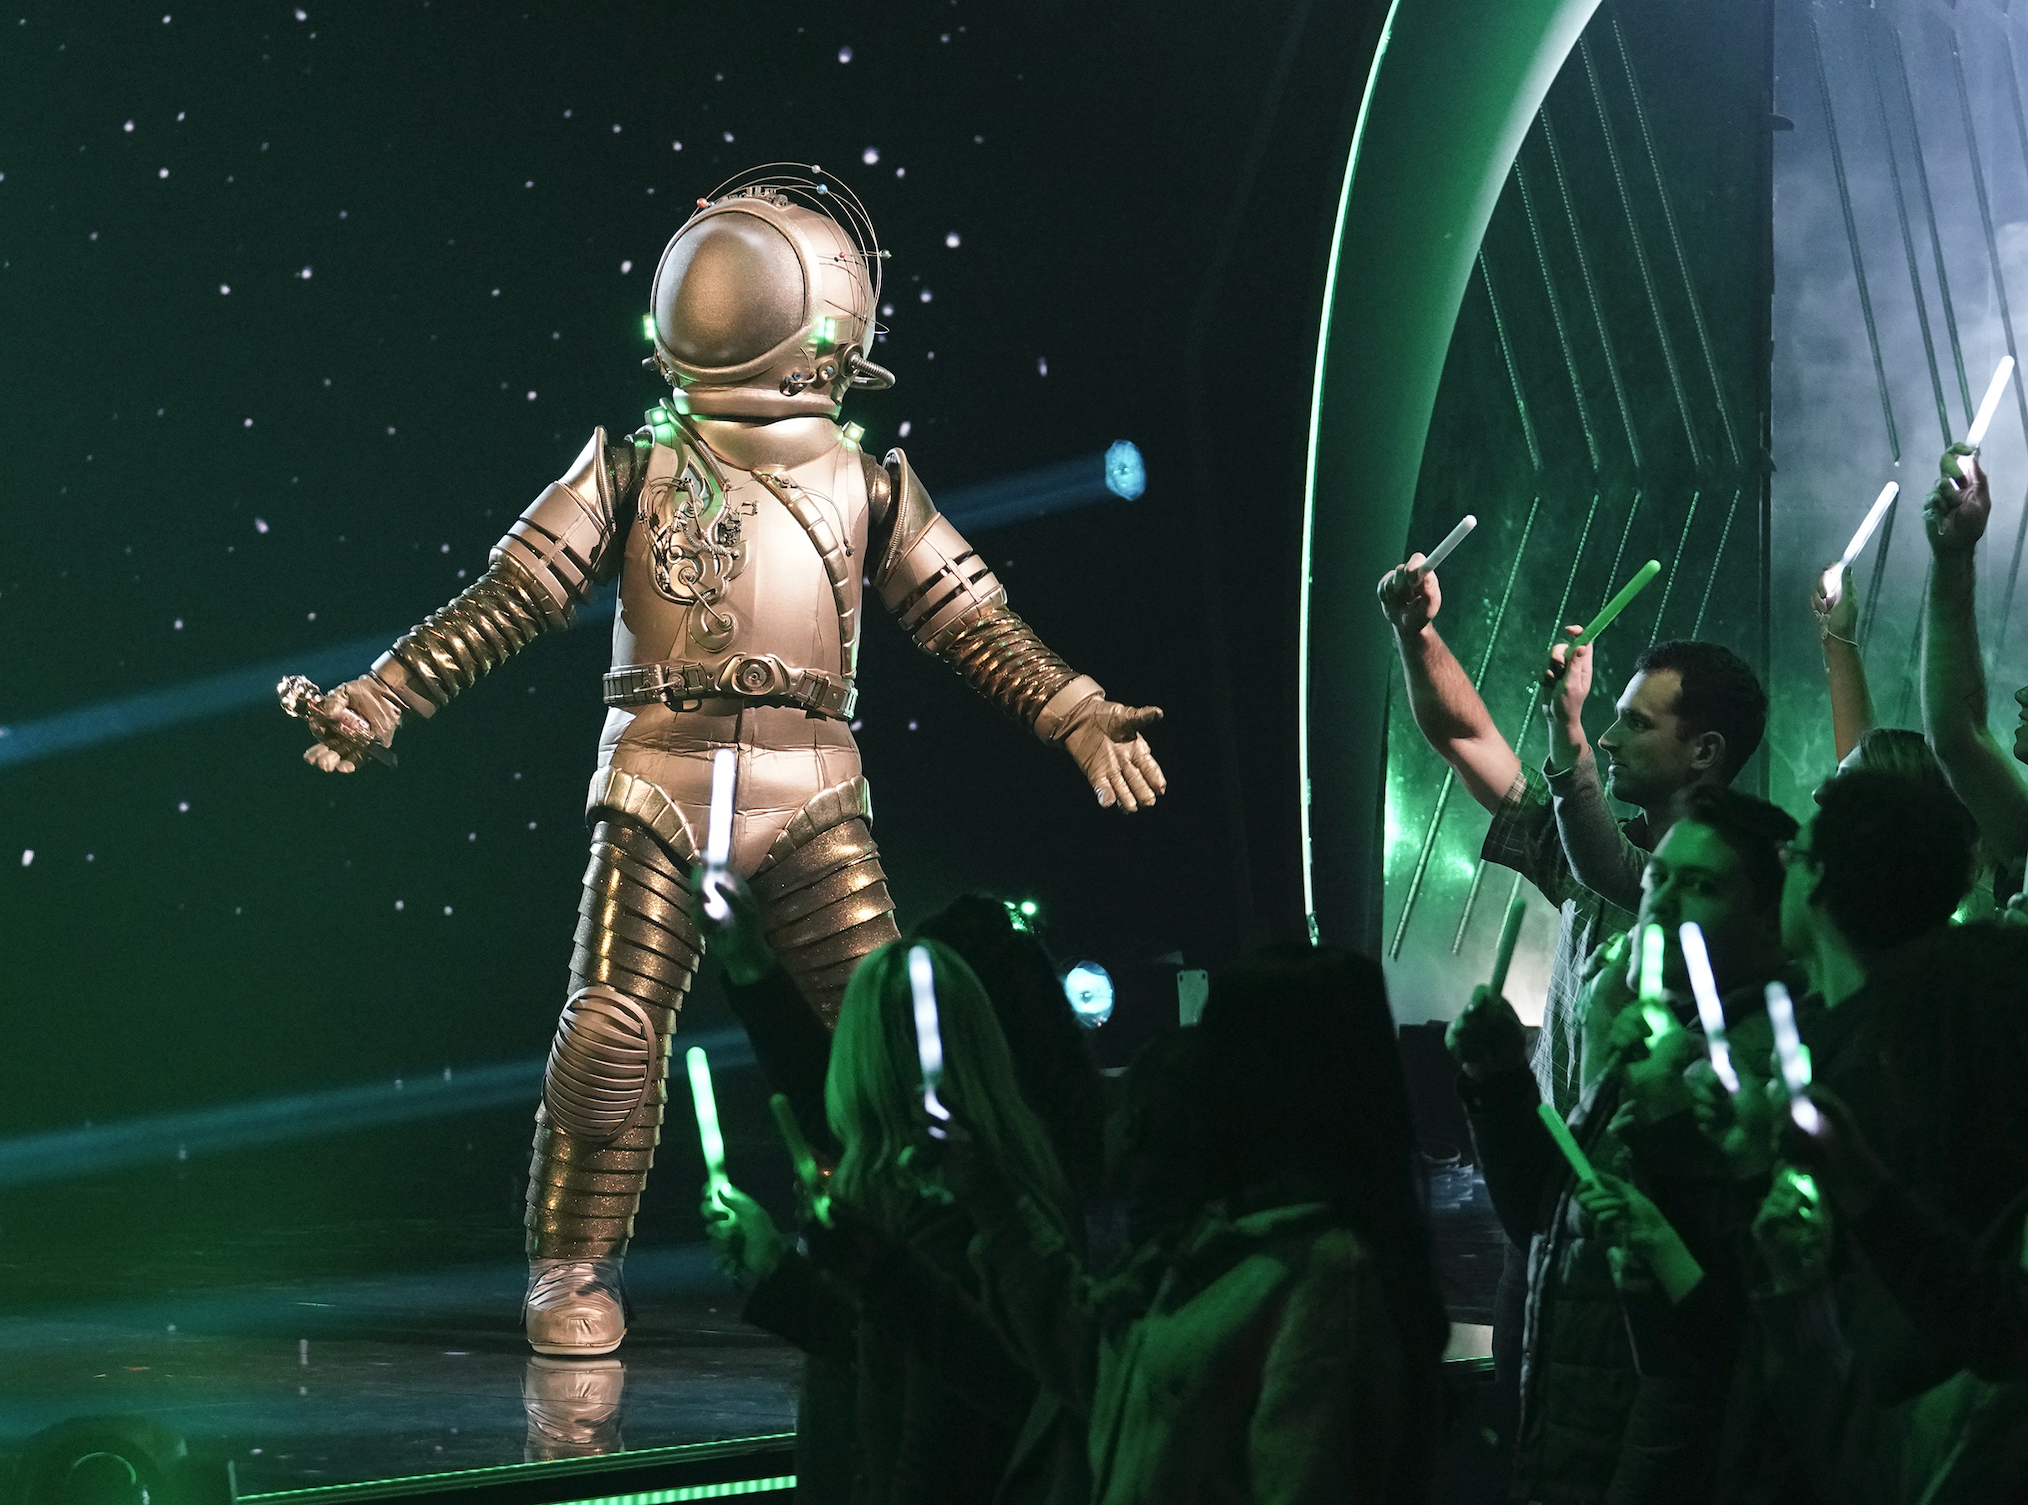 The Masked Singer Season 3 Astronaut Performance